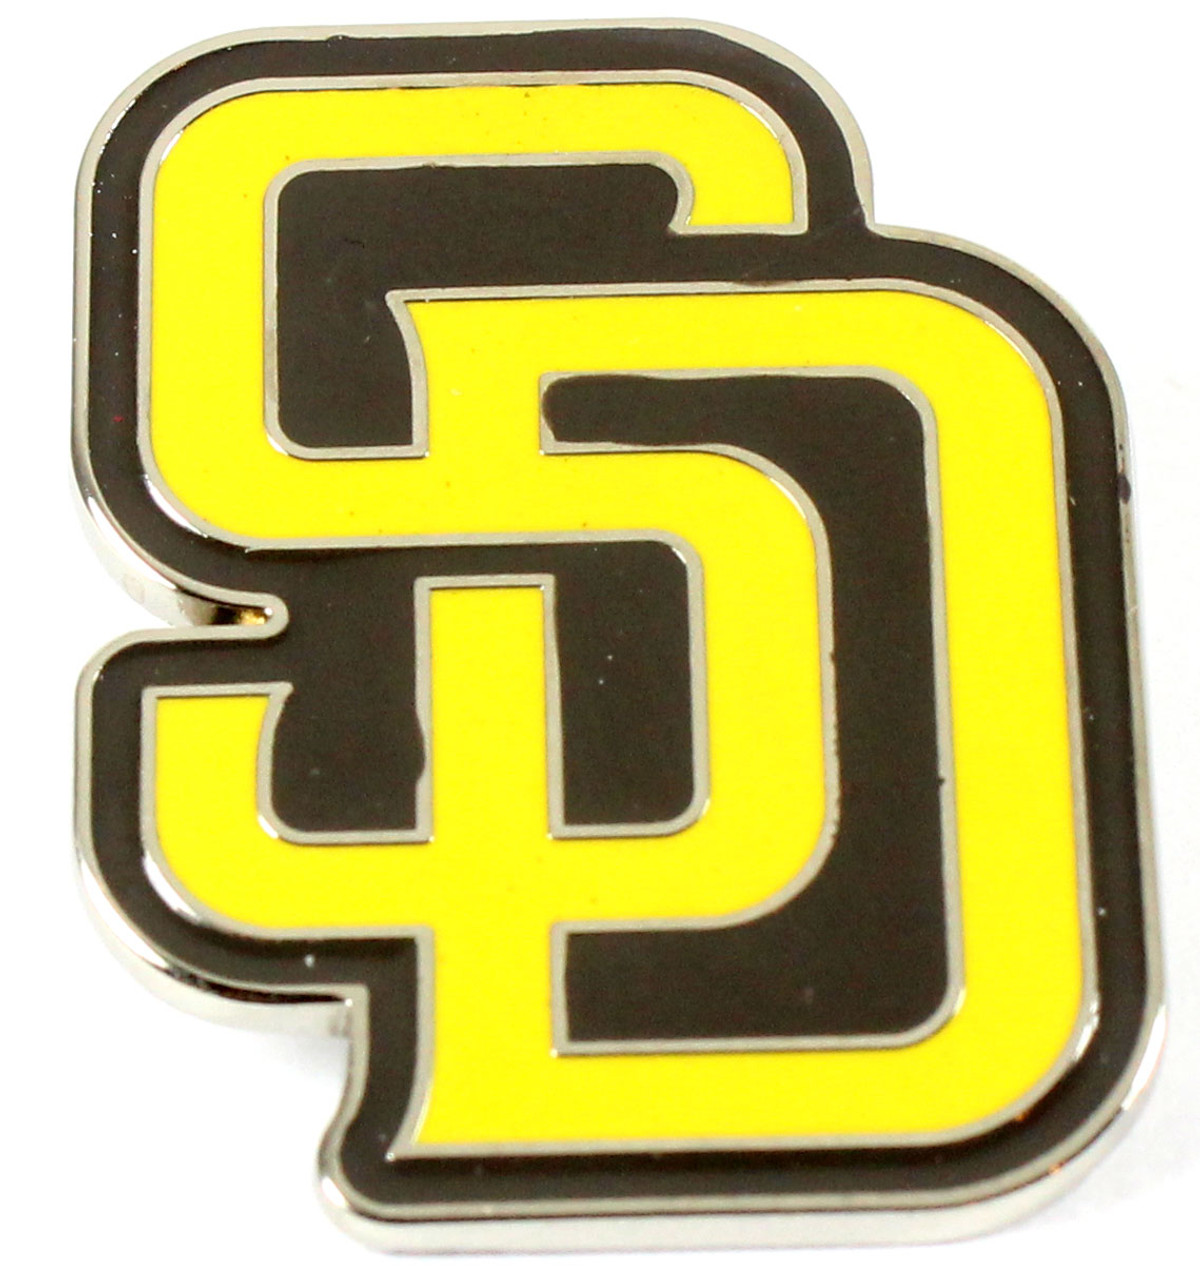 San Diego Padres Color Emblem